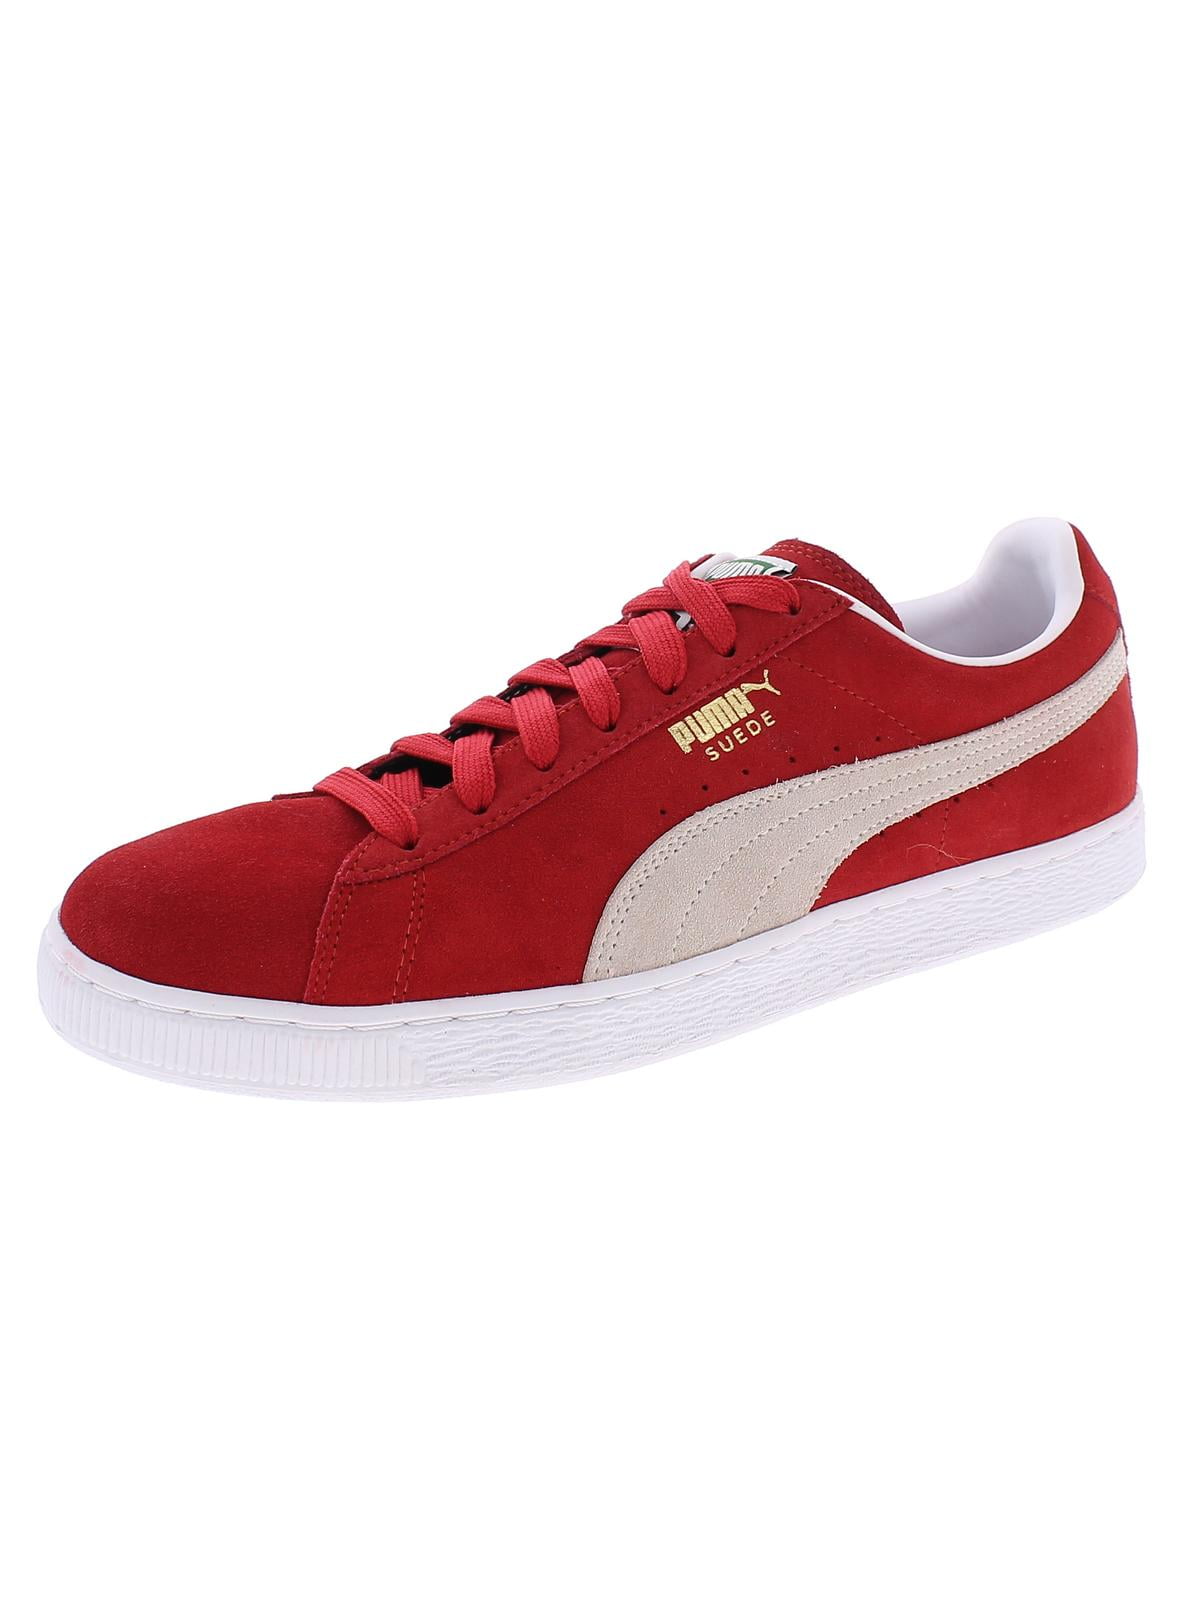 Puma Mens High Risk Suede Colorblock Sneakers Red 11 Medium (D ...